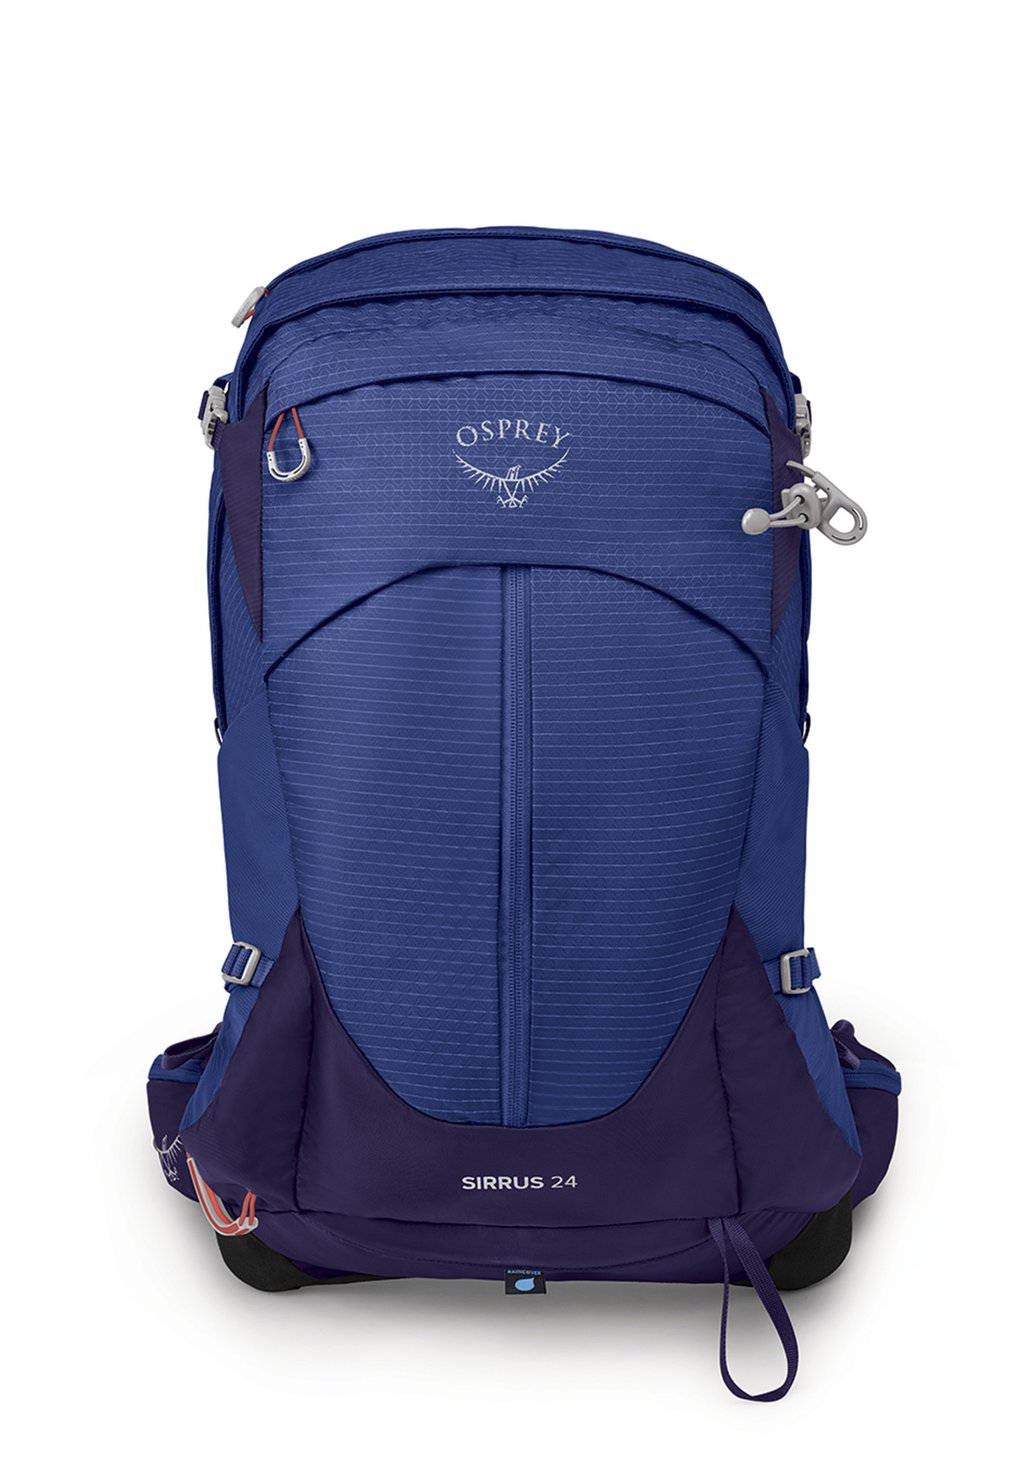 Туристический рюкзак SIRRUS Osprey, цвет blueberry